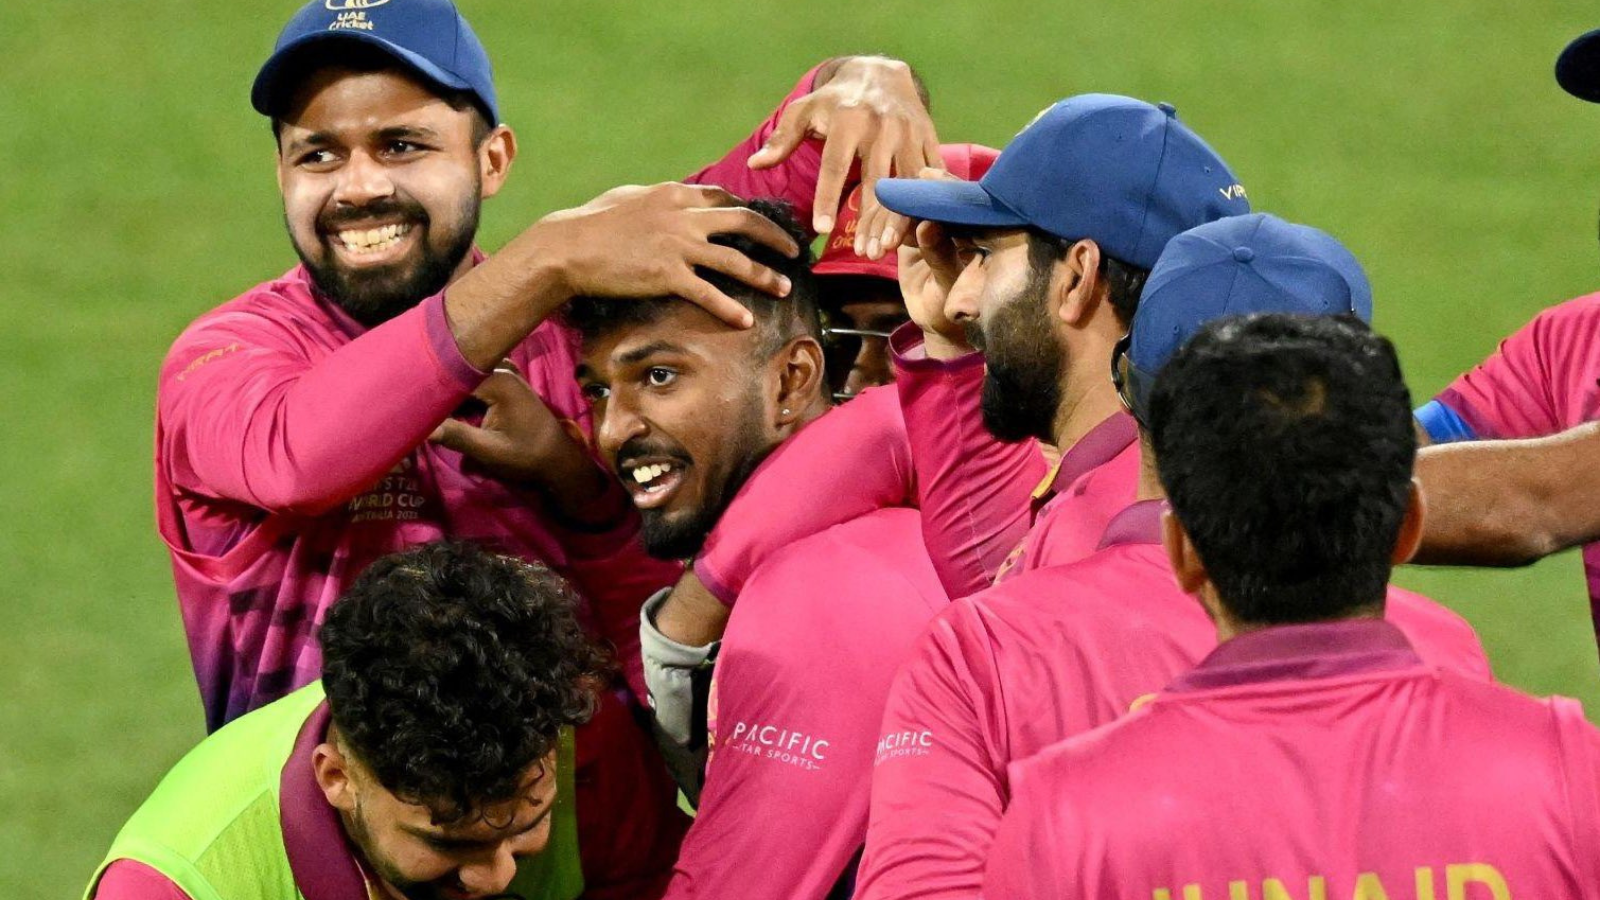 UAE's hat-trick hero from Chennai Karthik Meiyappan reveals Tamil conversation with wicketkeeper